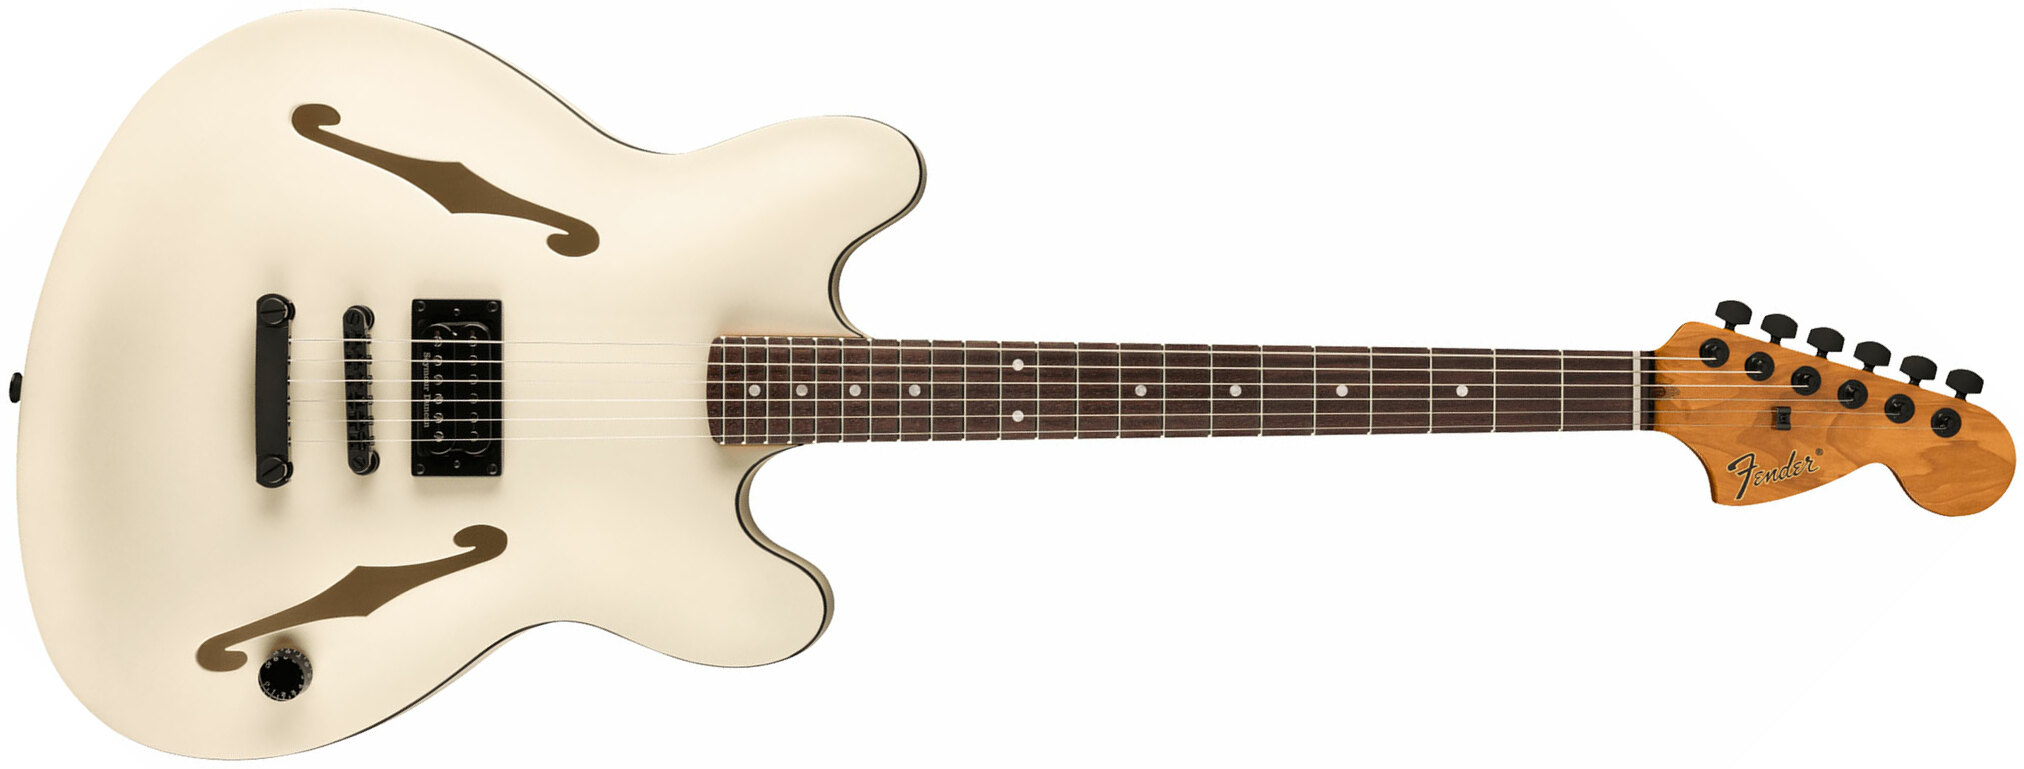 Fender Tom Delonge Starcaster Signature 1h Seymour Duncan Ht Rw - Satin Olympic White - Semi-Hollow E-Gitarre - Main picture